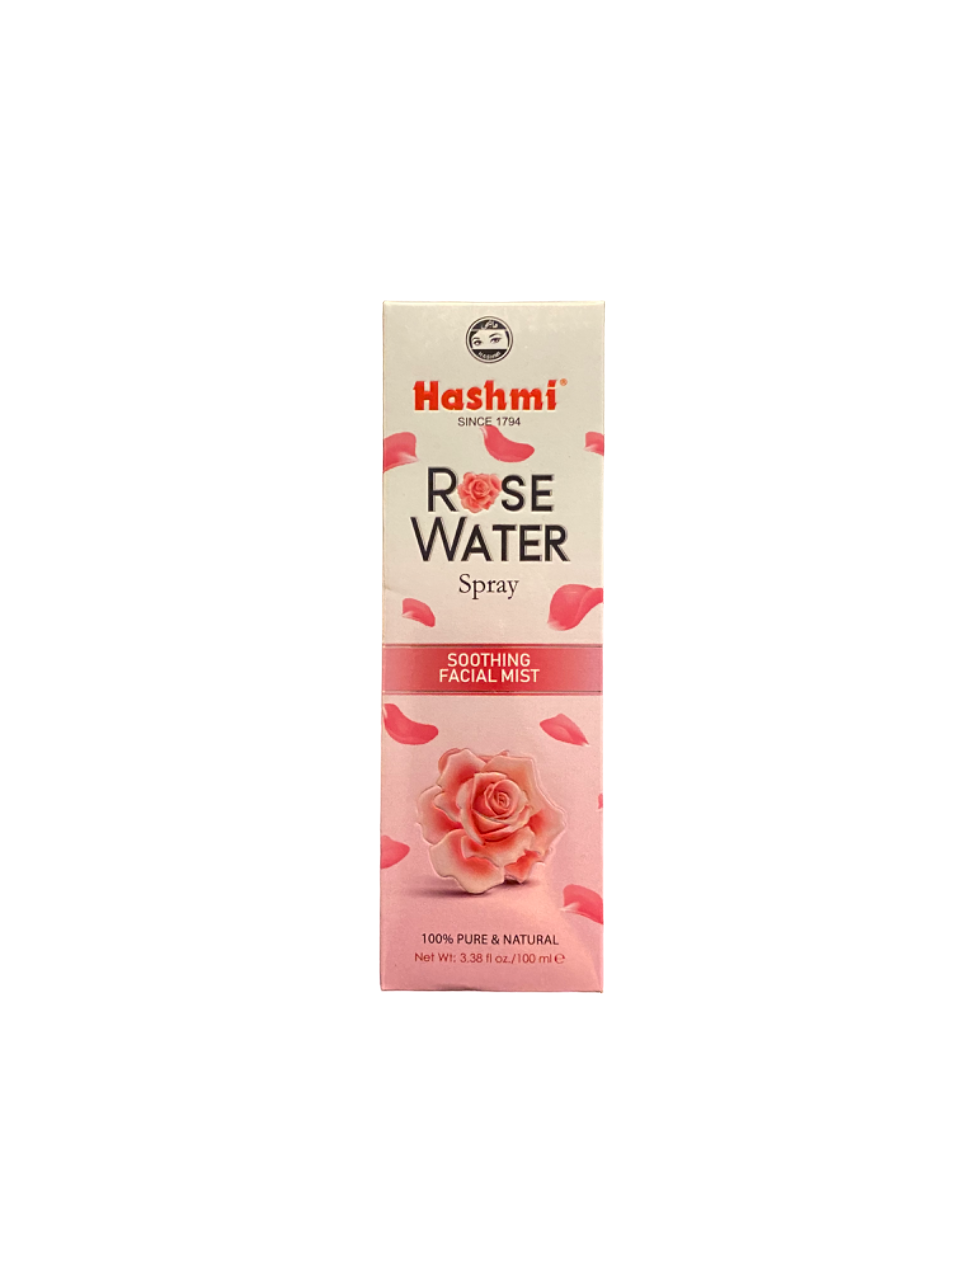 Eau de rose en spray - brume apaisante pour le visage - 100ml - 100% naturel - ماء الورد